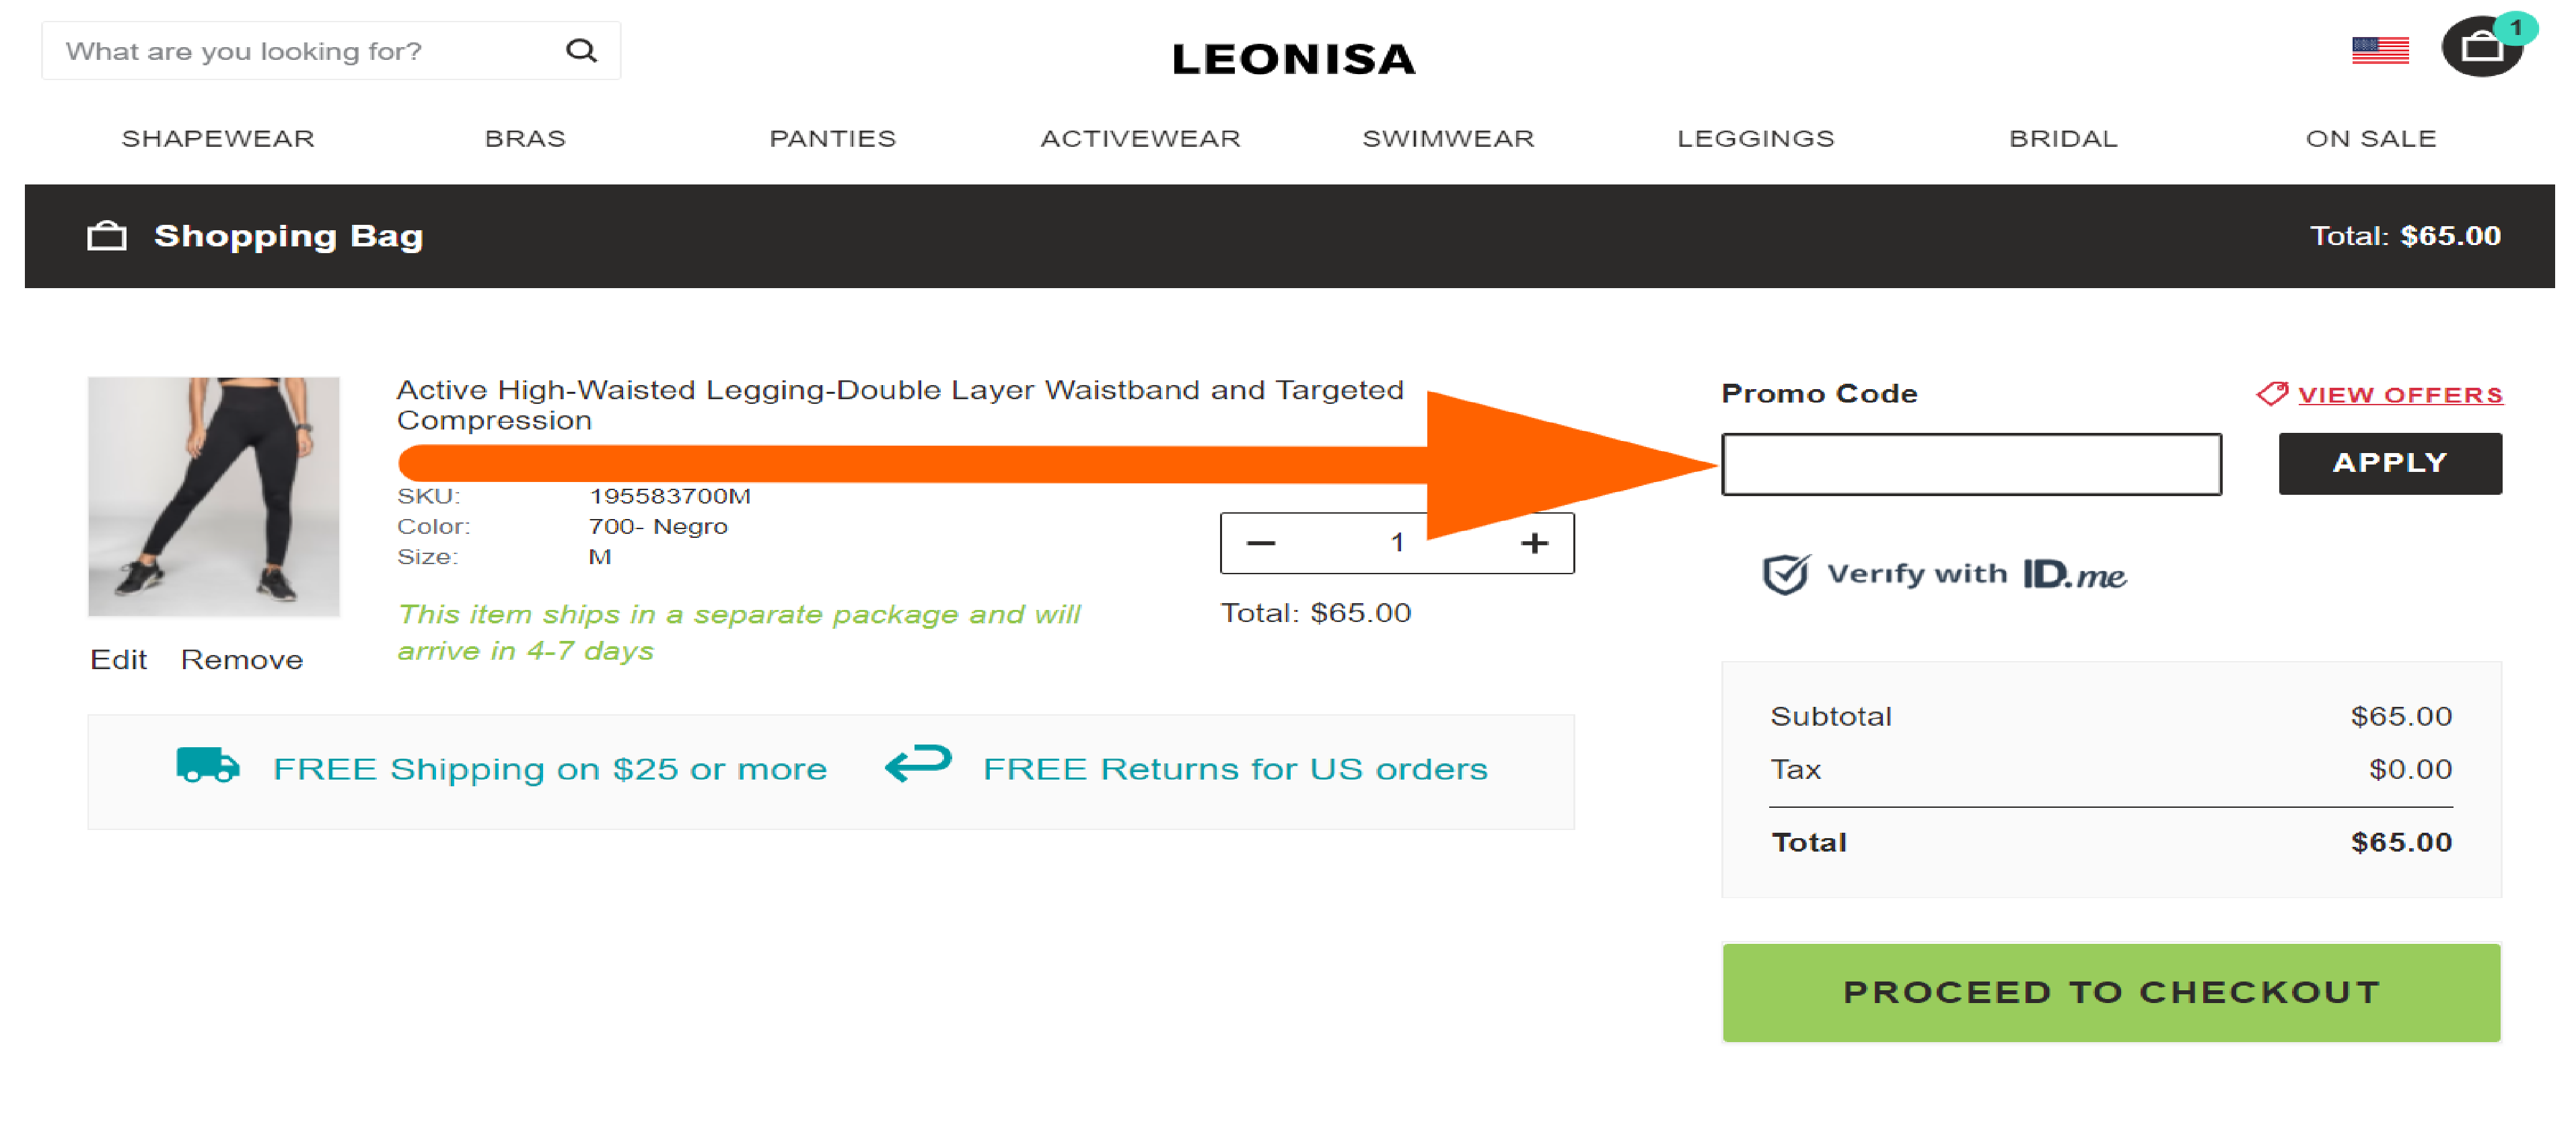 leonisa coupon code